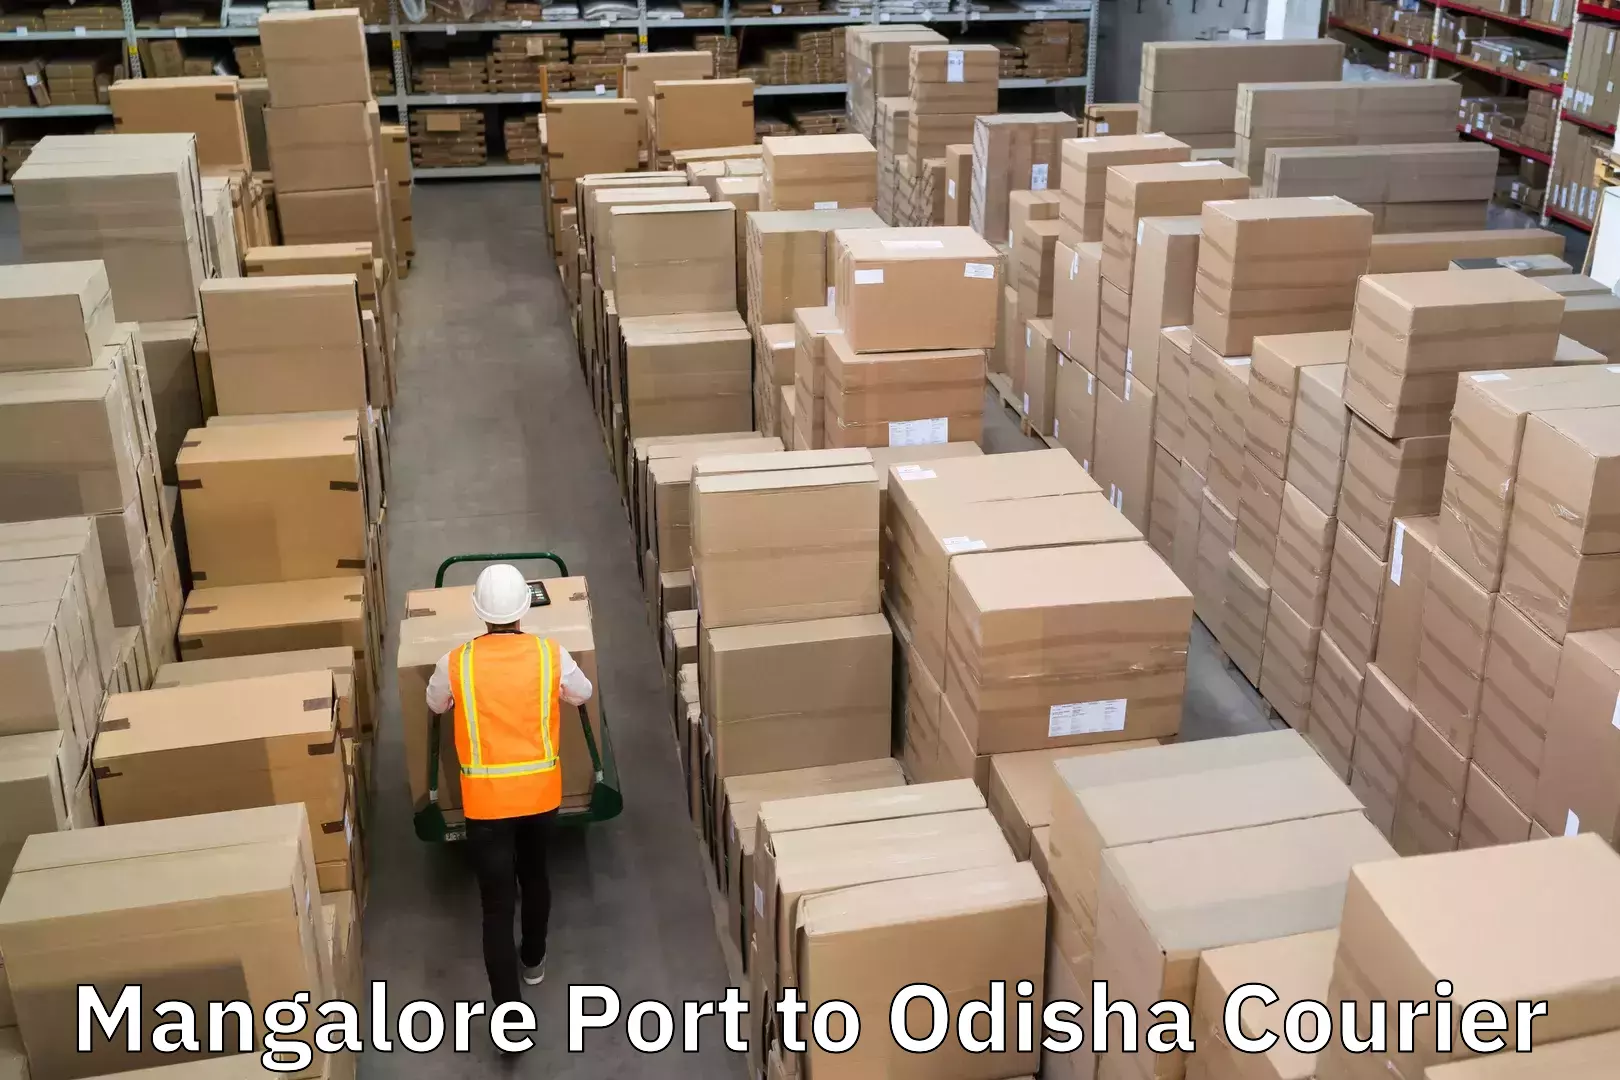 Reliable parcel services Mangalore Port to Odisha